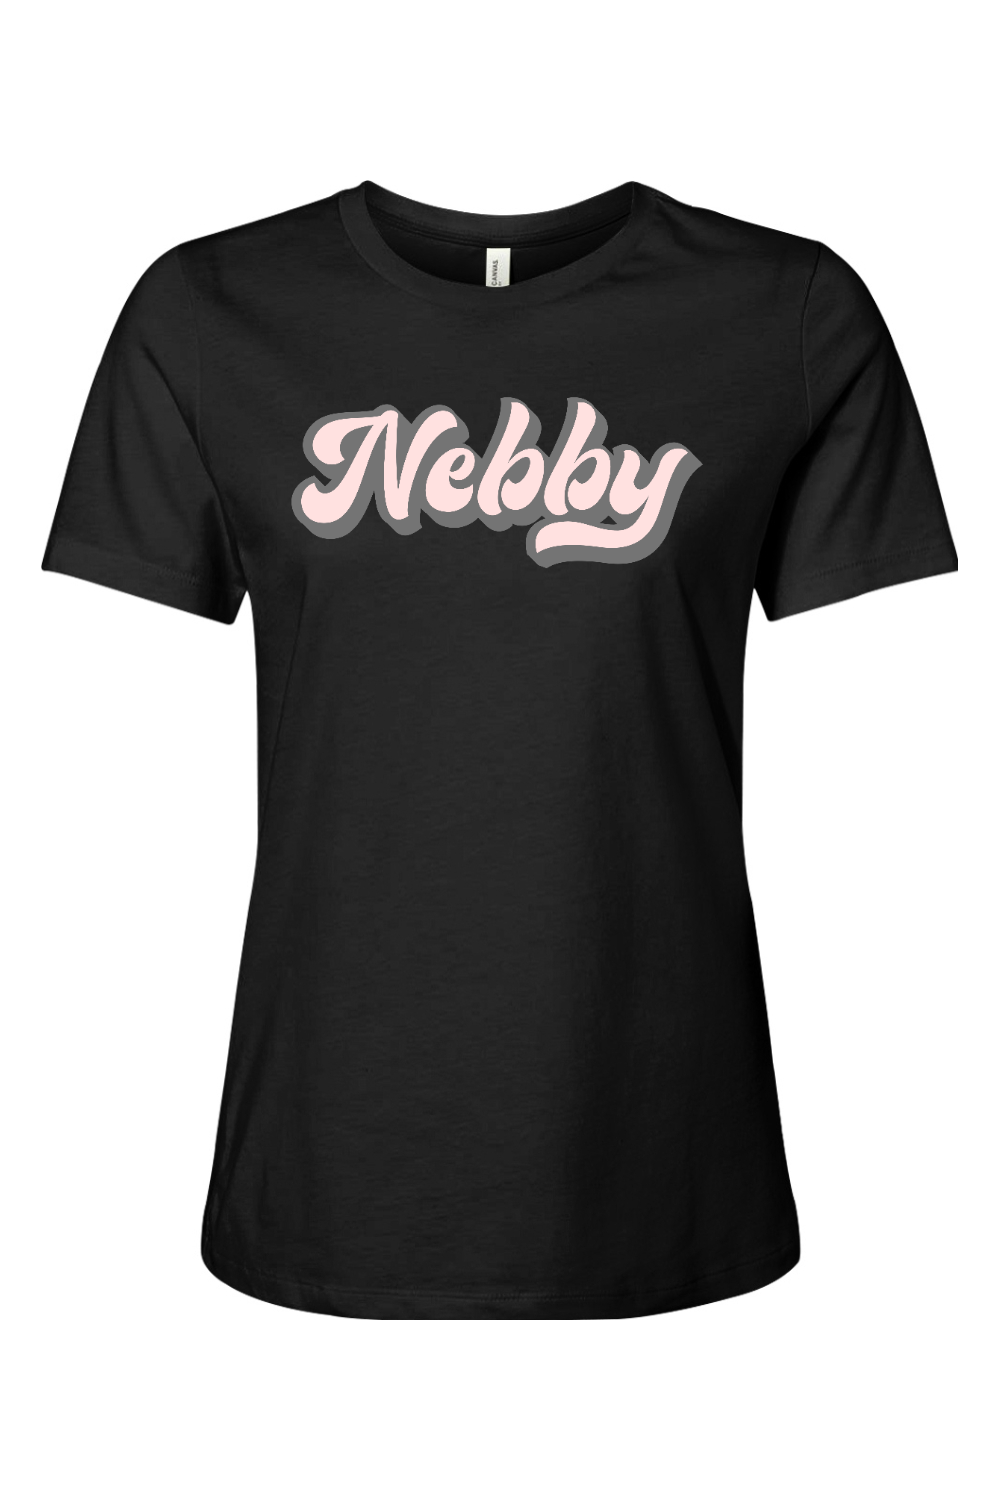 Nebby - Bella + Canvas Women’s Relaxed Jersey Short Sleeve Tee - Yinzylvania